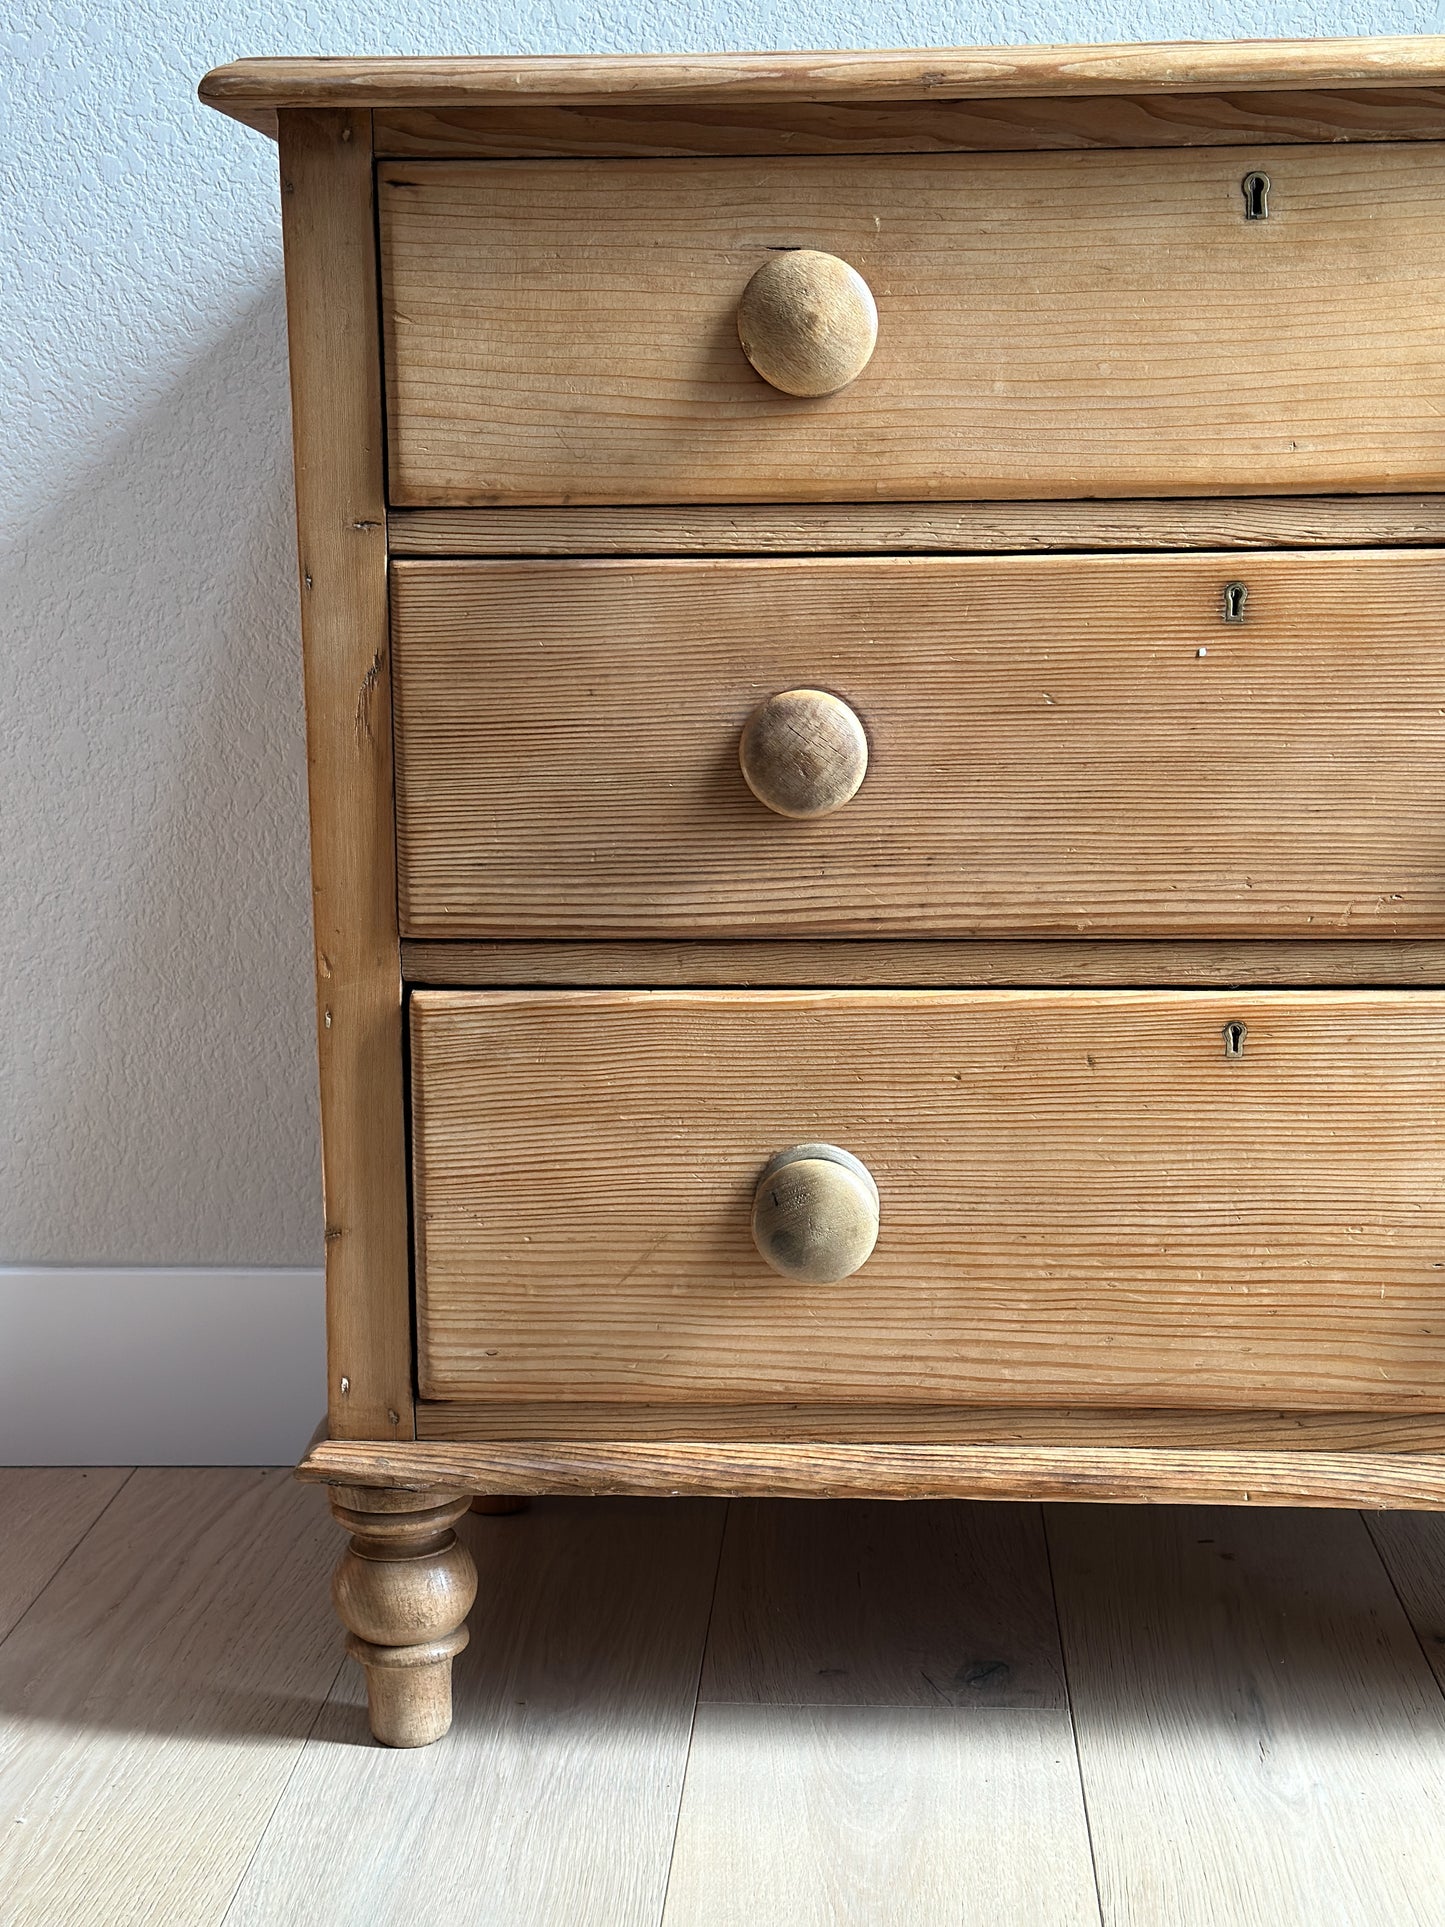 Antique English Pine Dresser